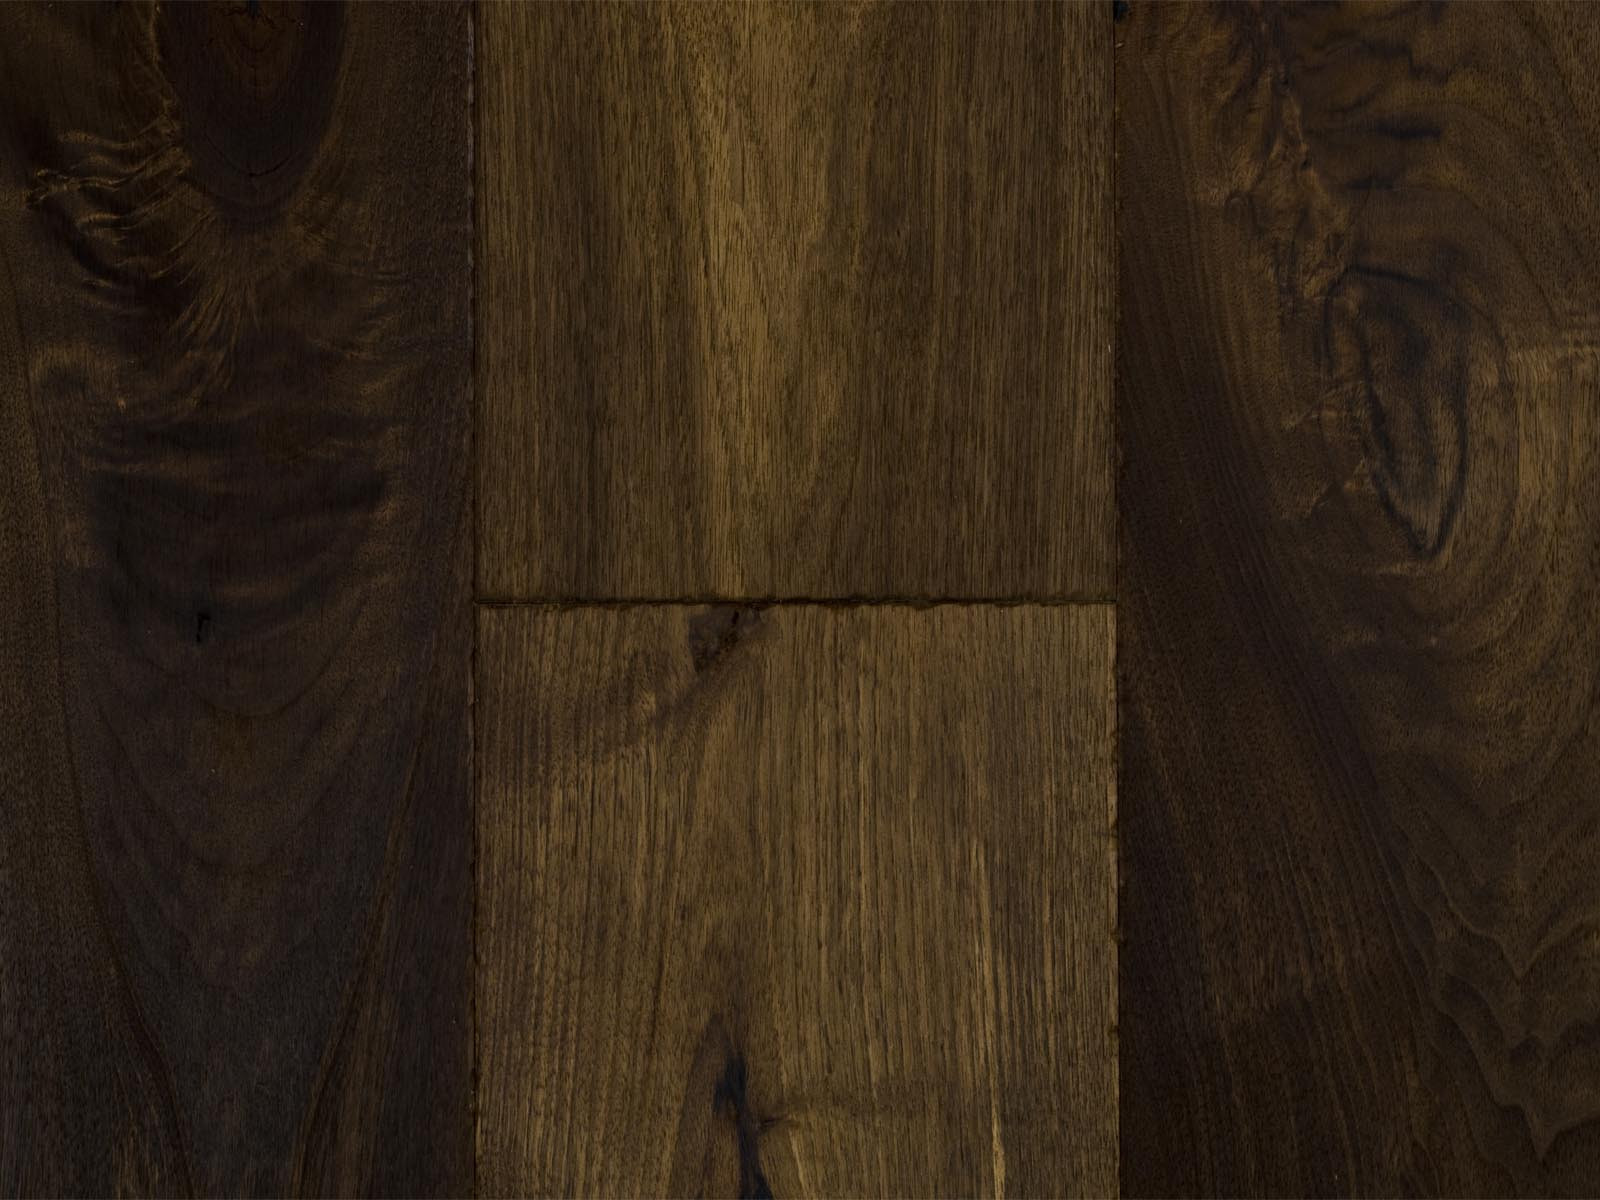 hardwood flooring ratings and reviews of duchateau hardwood flooring houston tx discount engineered wood regarding kasteel walnut